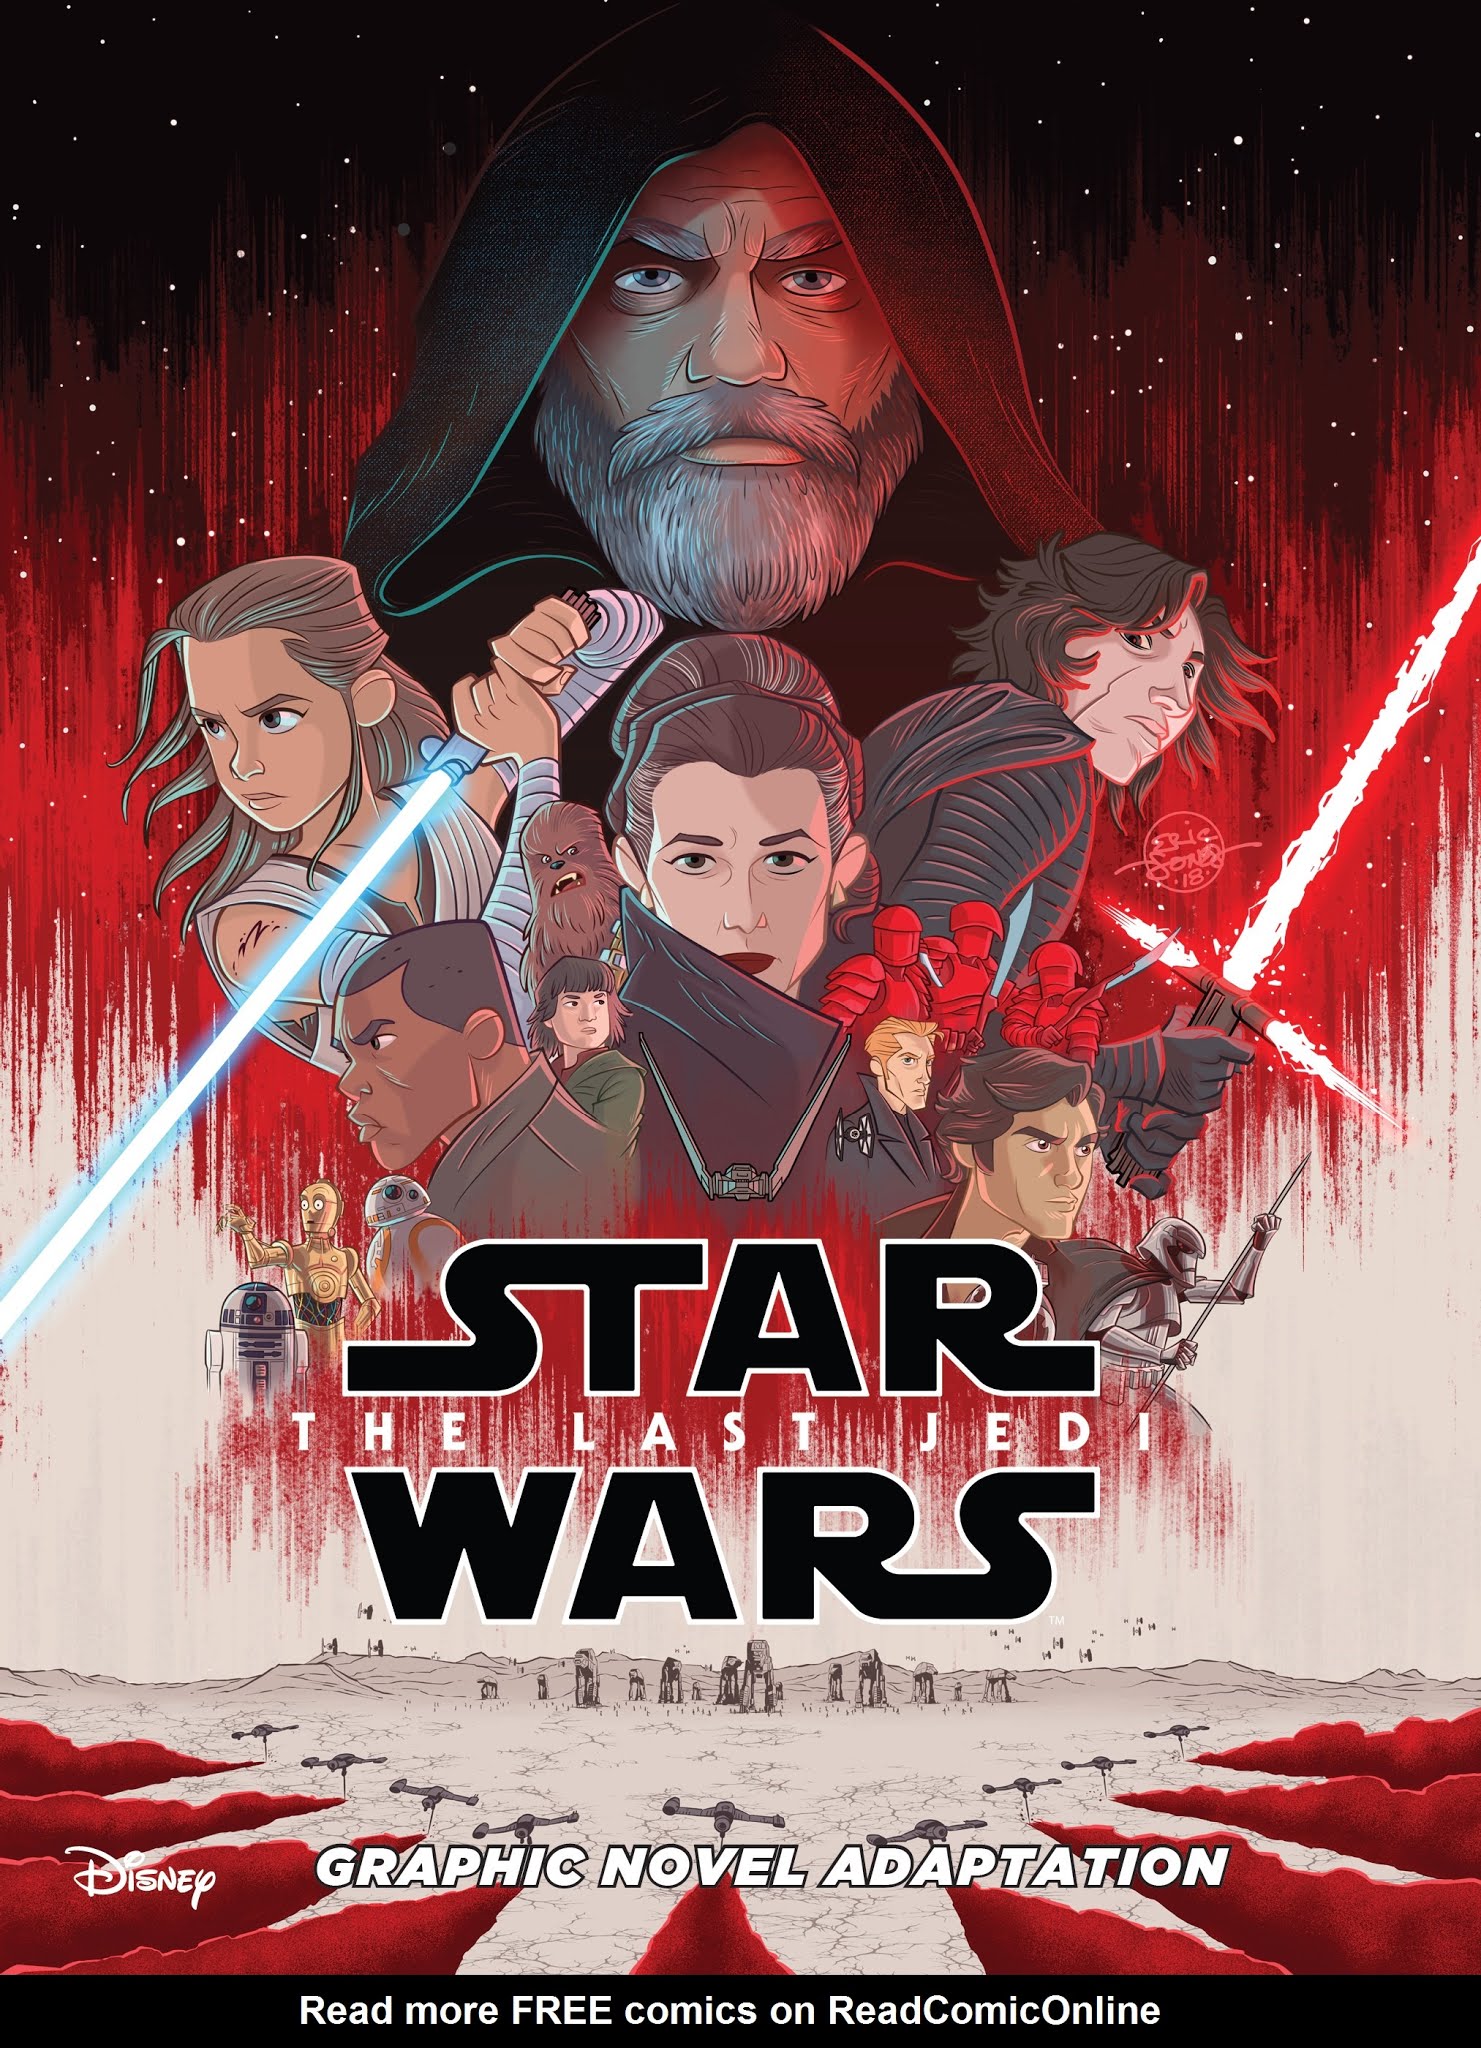 Read online Star Wars: The Last Jedi Graphic Novel Adaptation comic -  Issue # TPB - 1